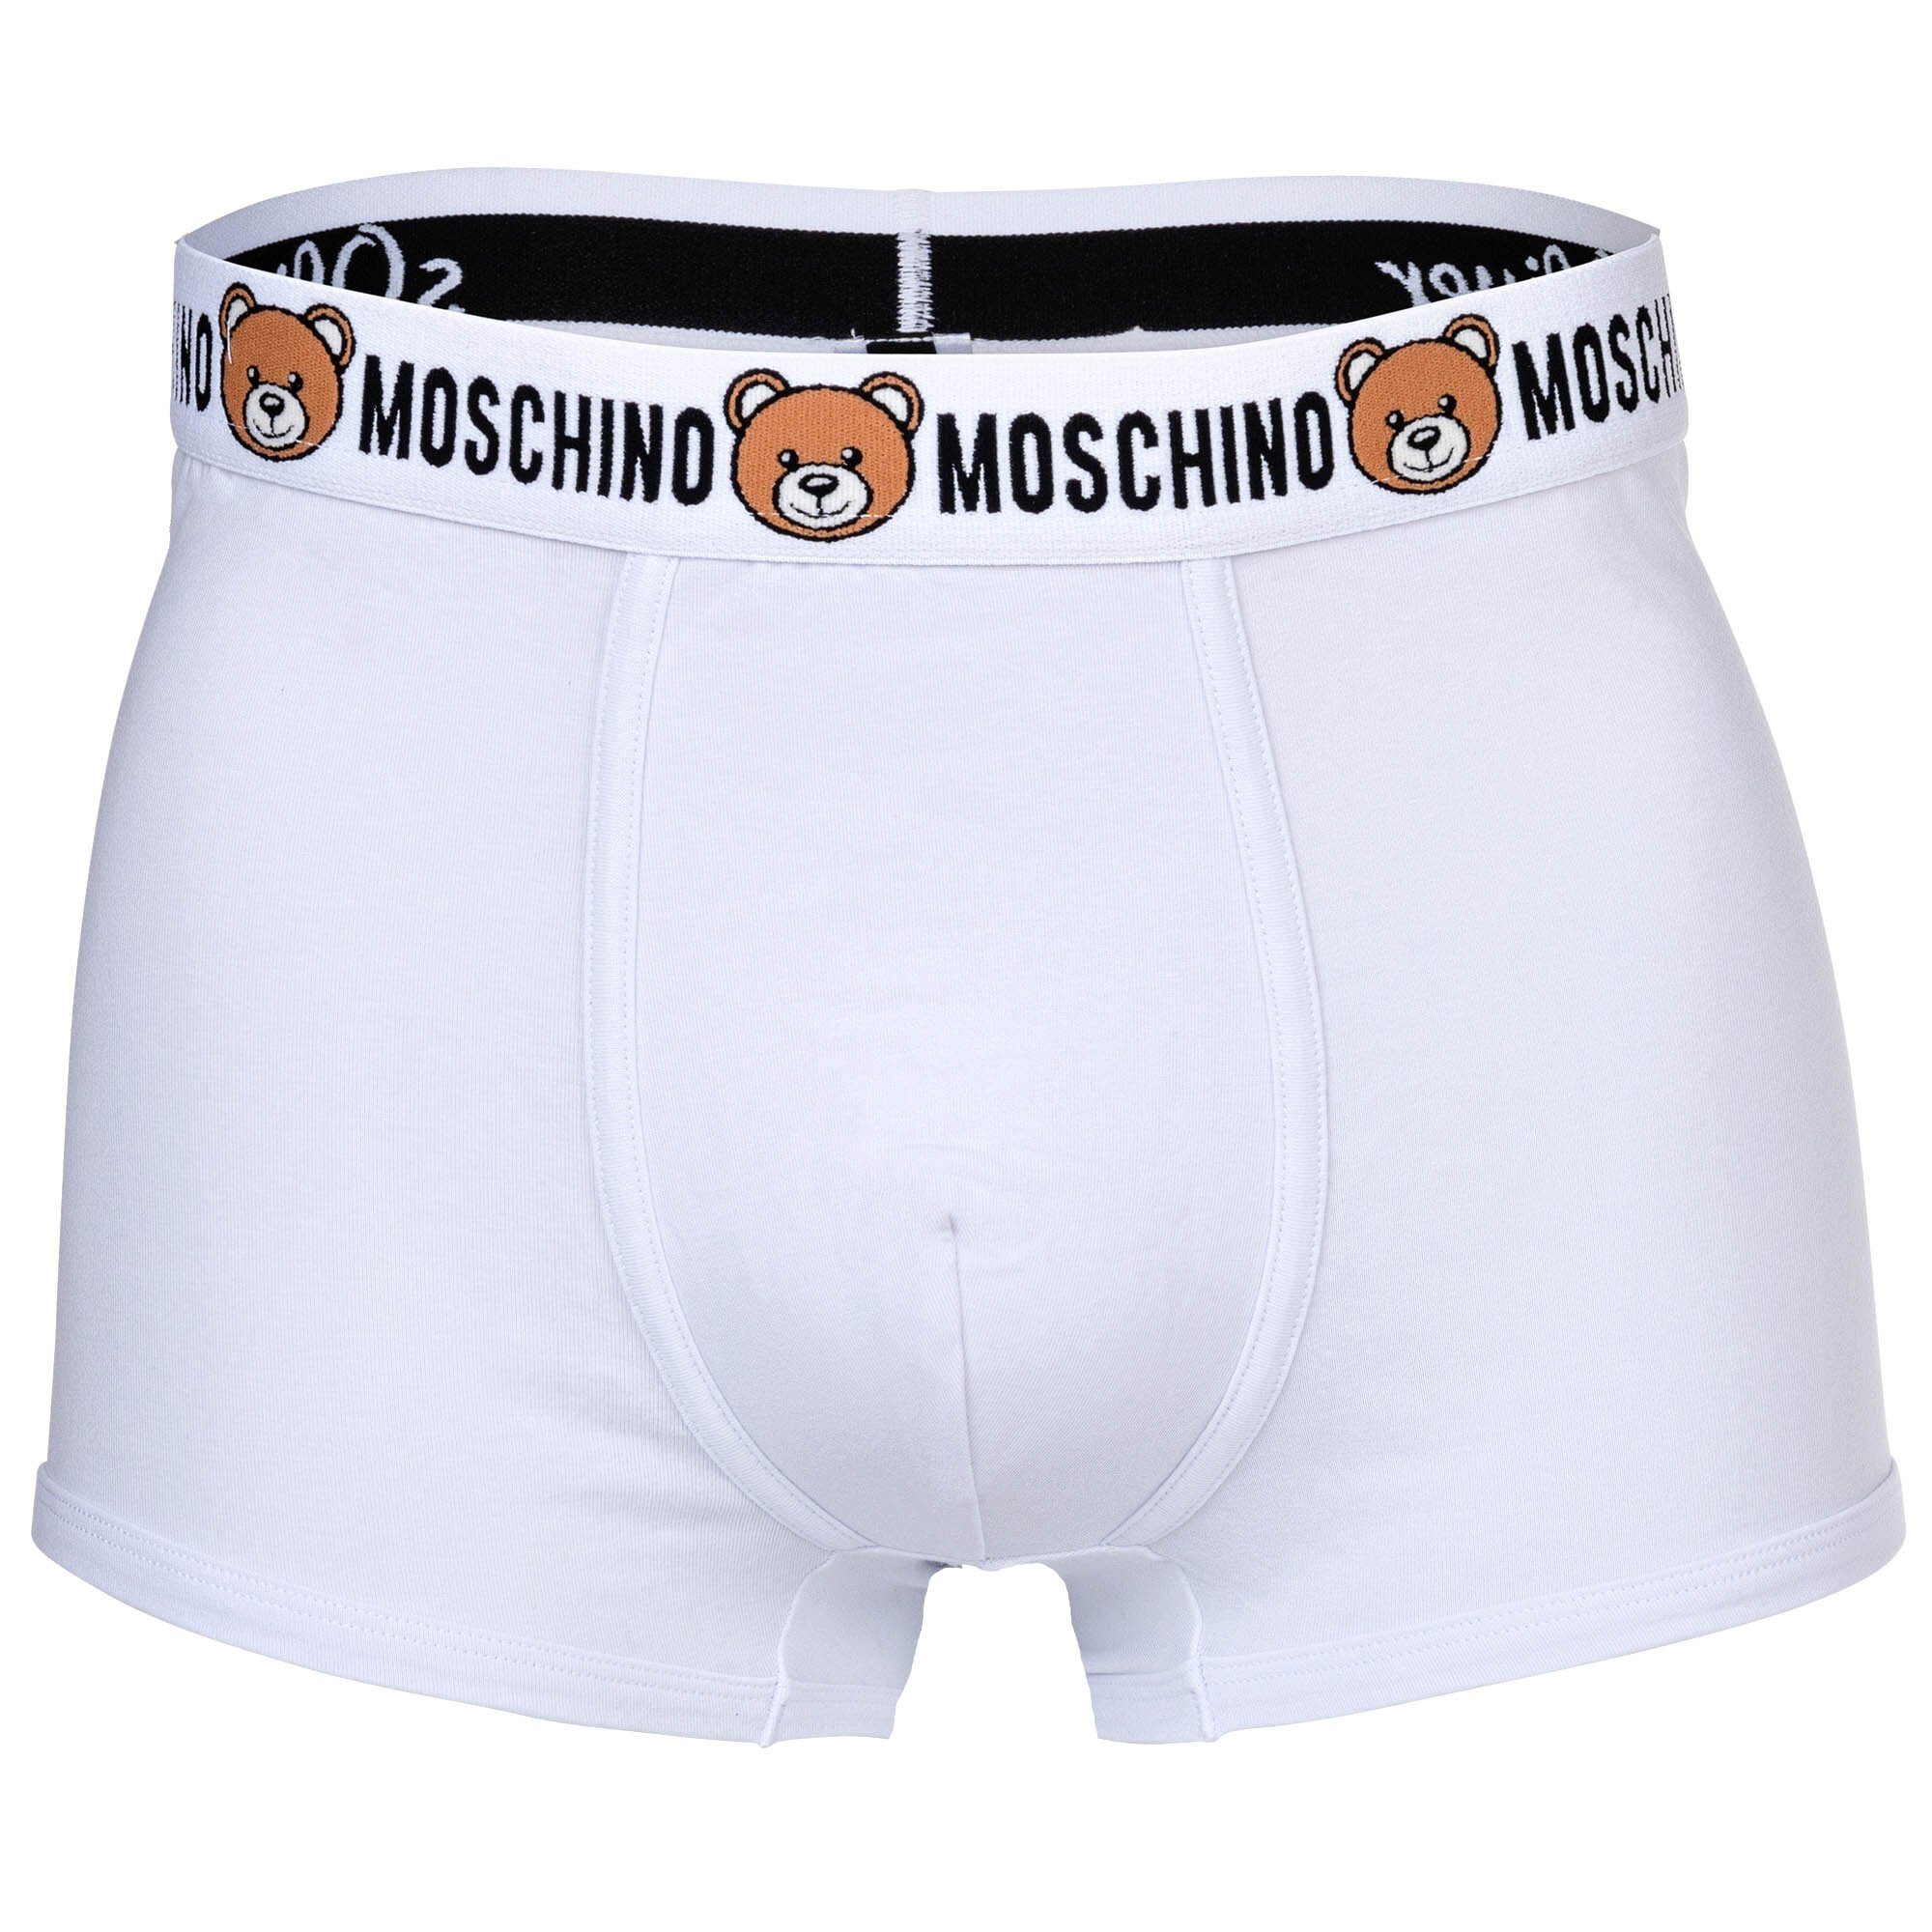 Moschino Boxer Herren Trunks 2er Weiß - Underbear, Unterhose Pack